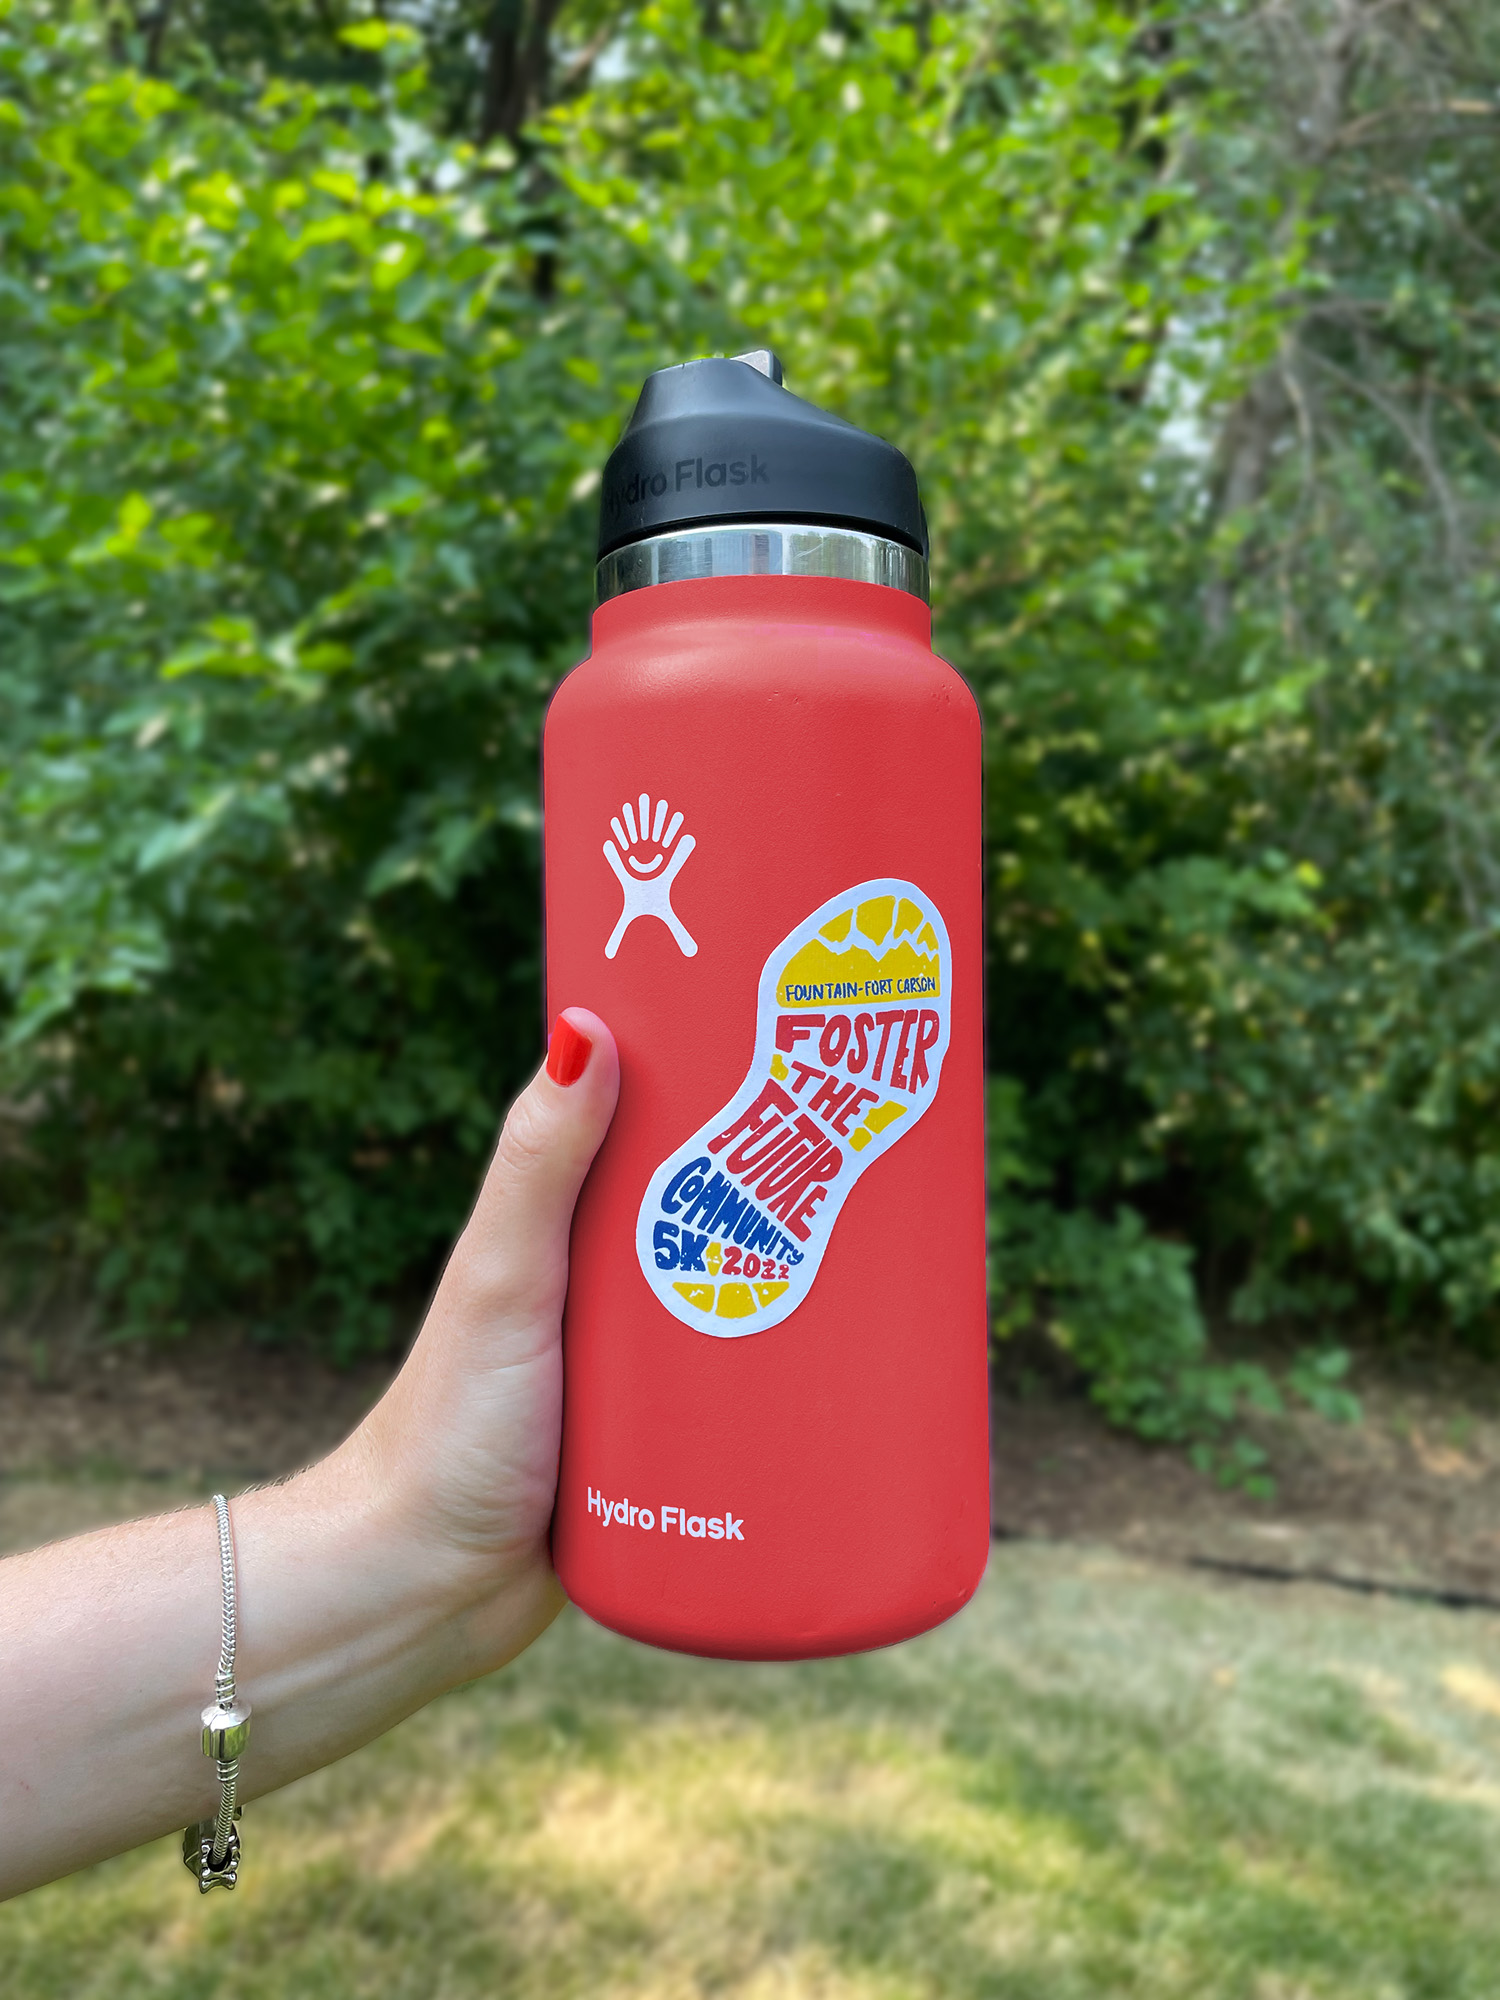 community 5k foster the future sticker on water bottle